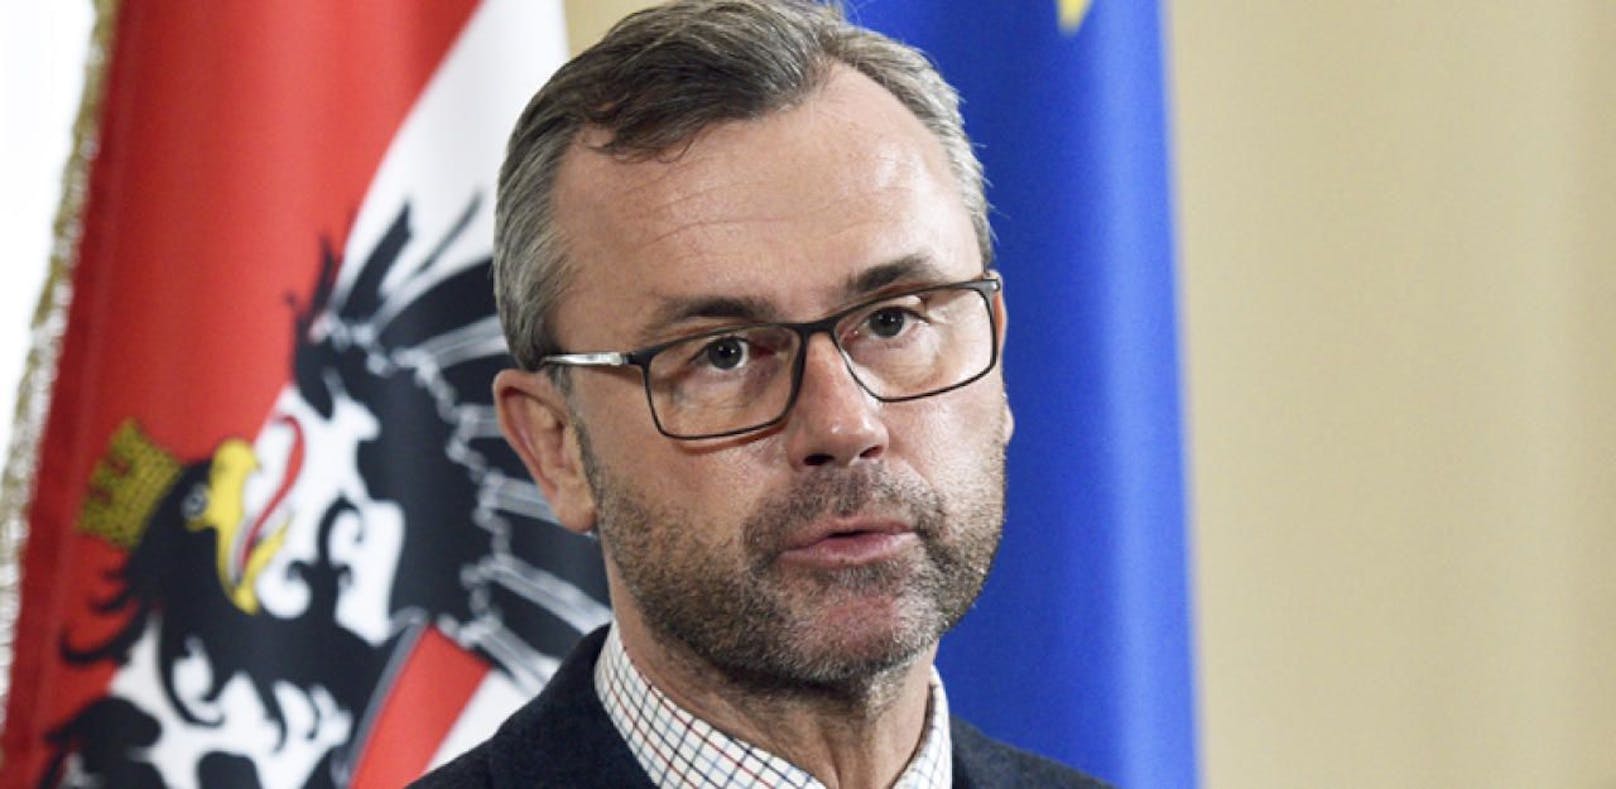 Dritter Nationalratspräsident Norbert Hofer von der FPÖ.